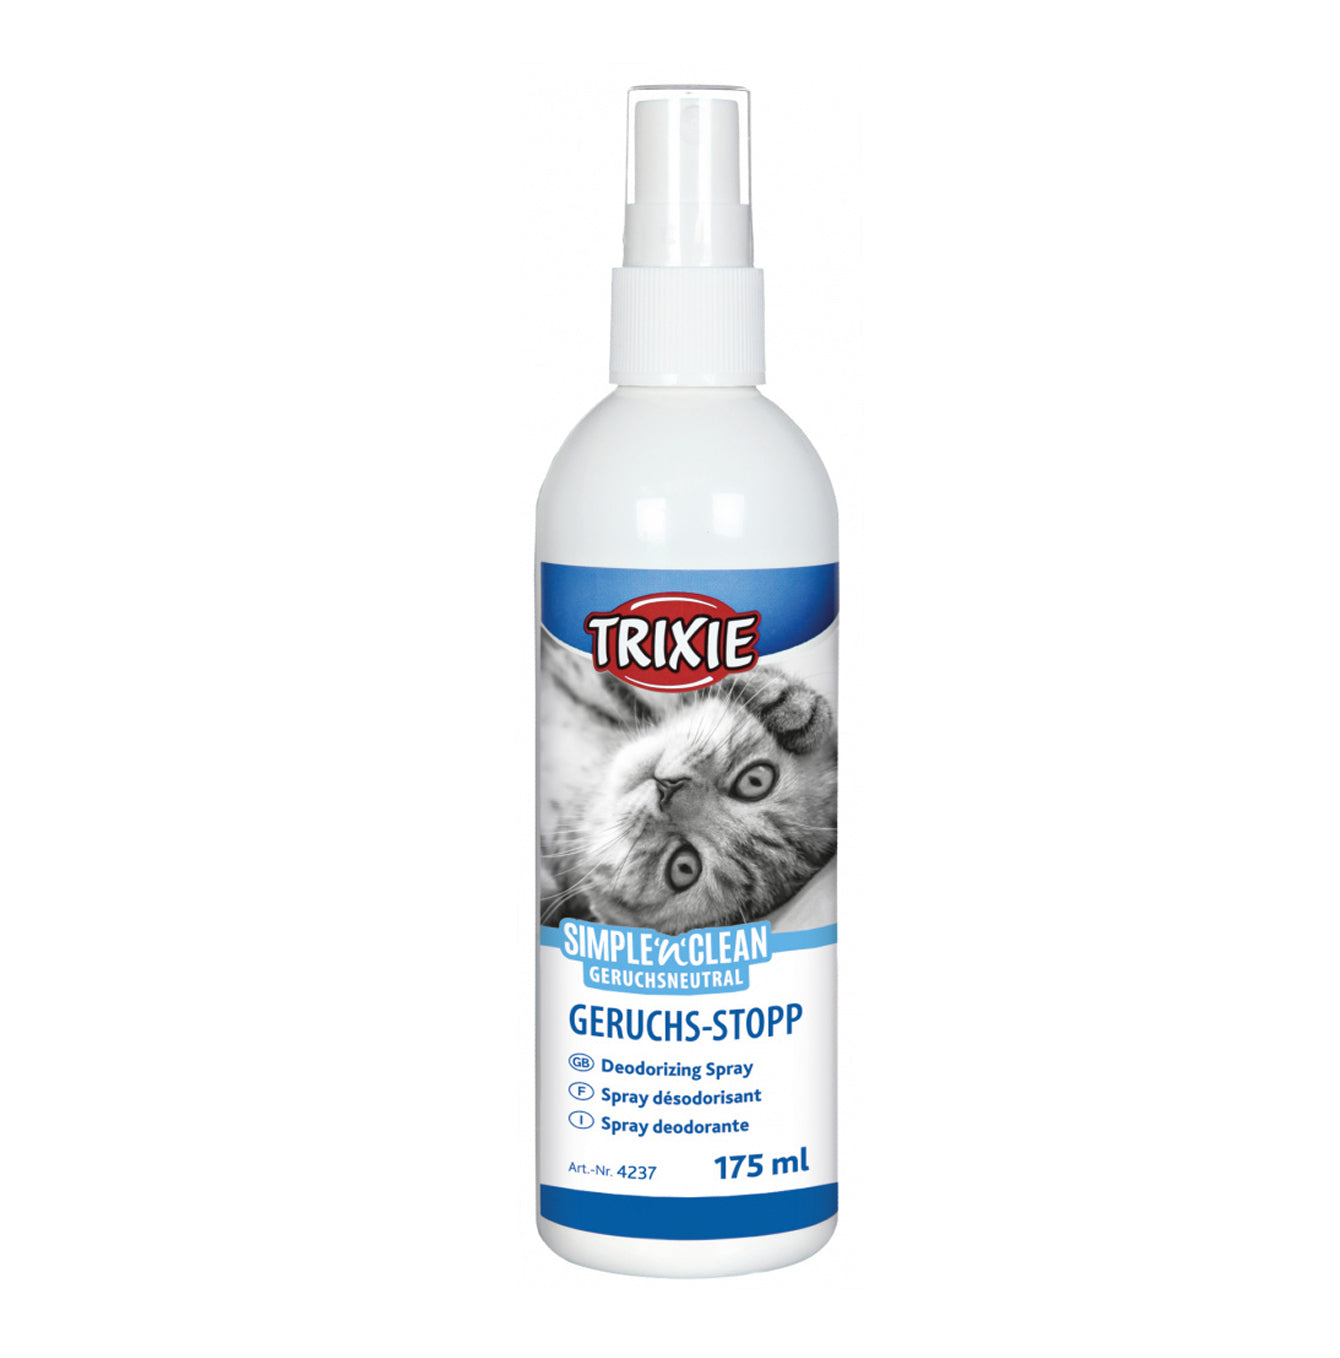 Trixie simple & clean deodorising spray bottle